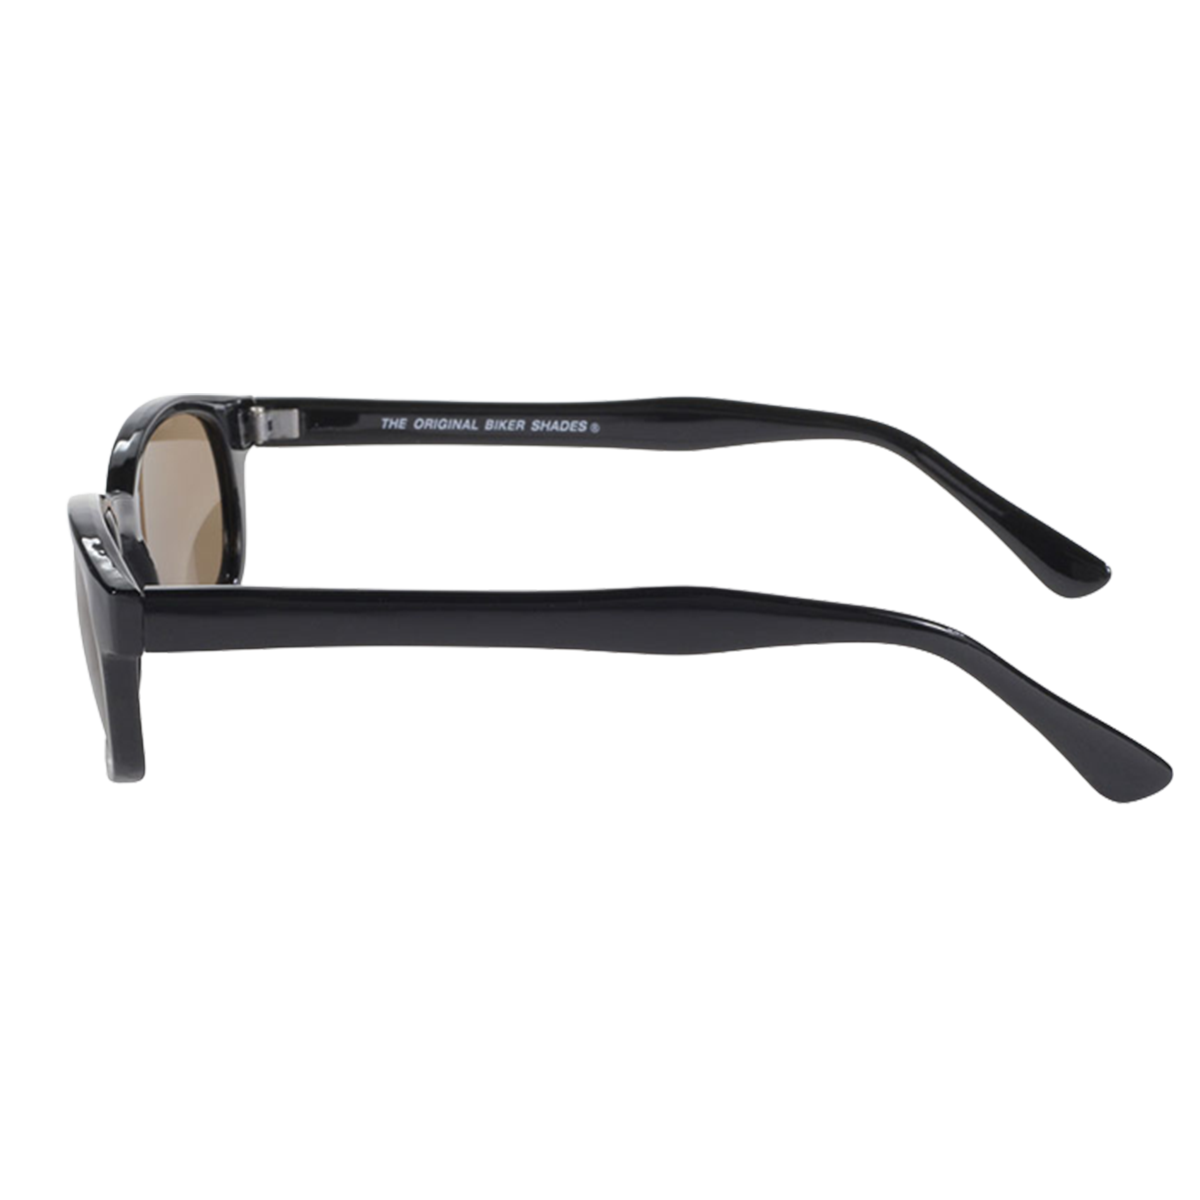 X-KD's 1121 - Dark brown lenses - Sunglasses